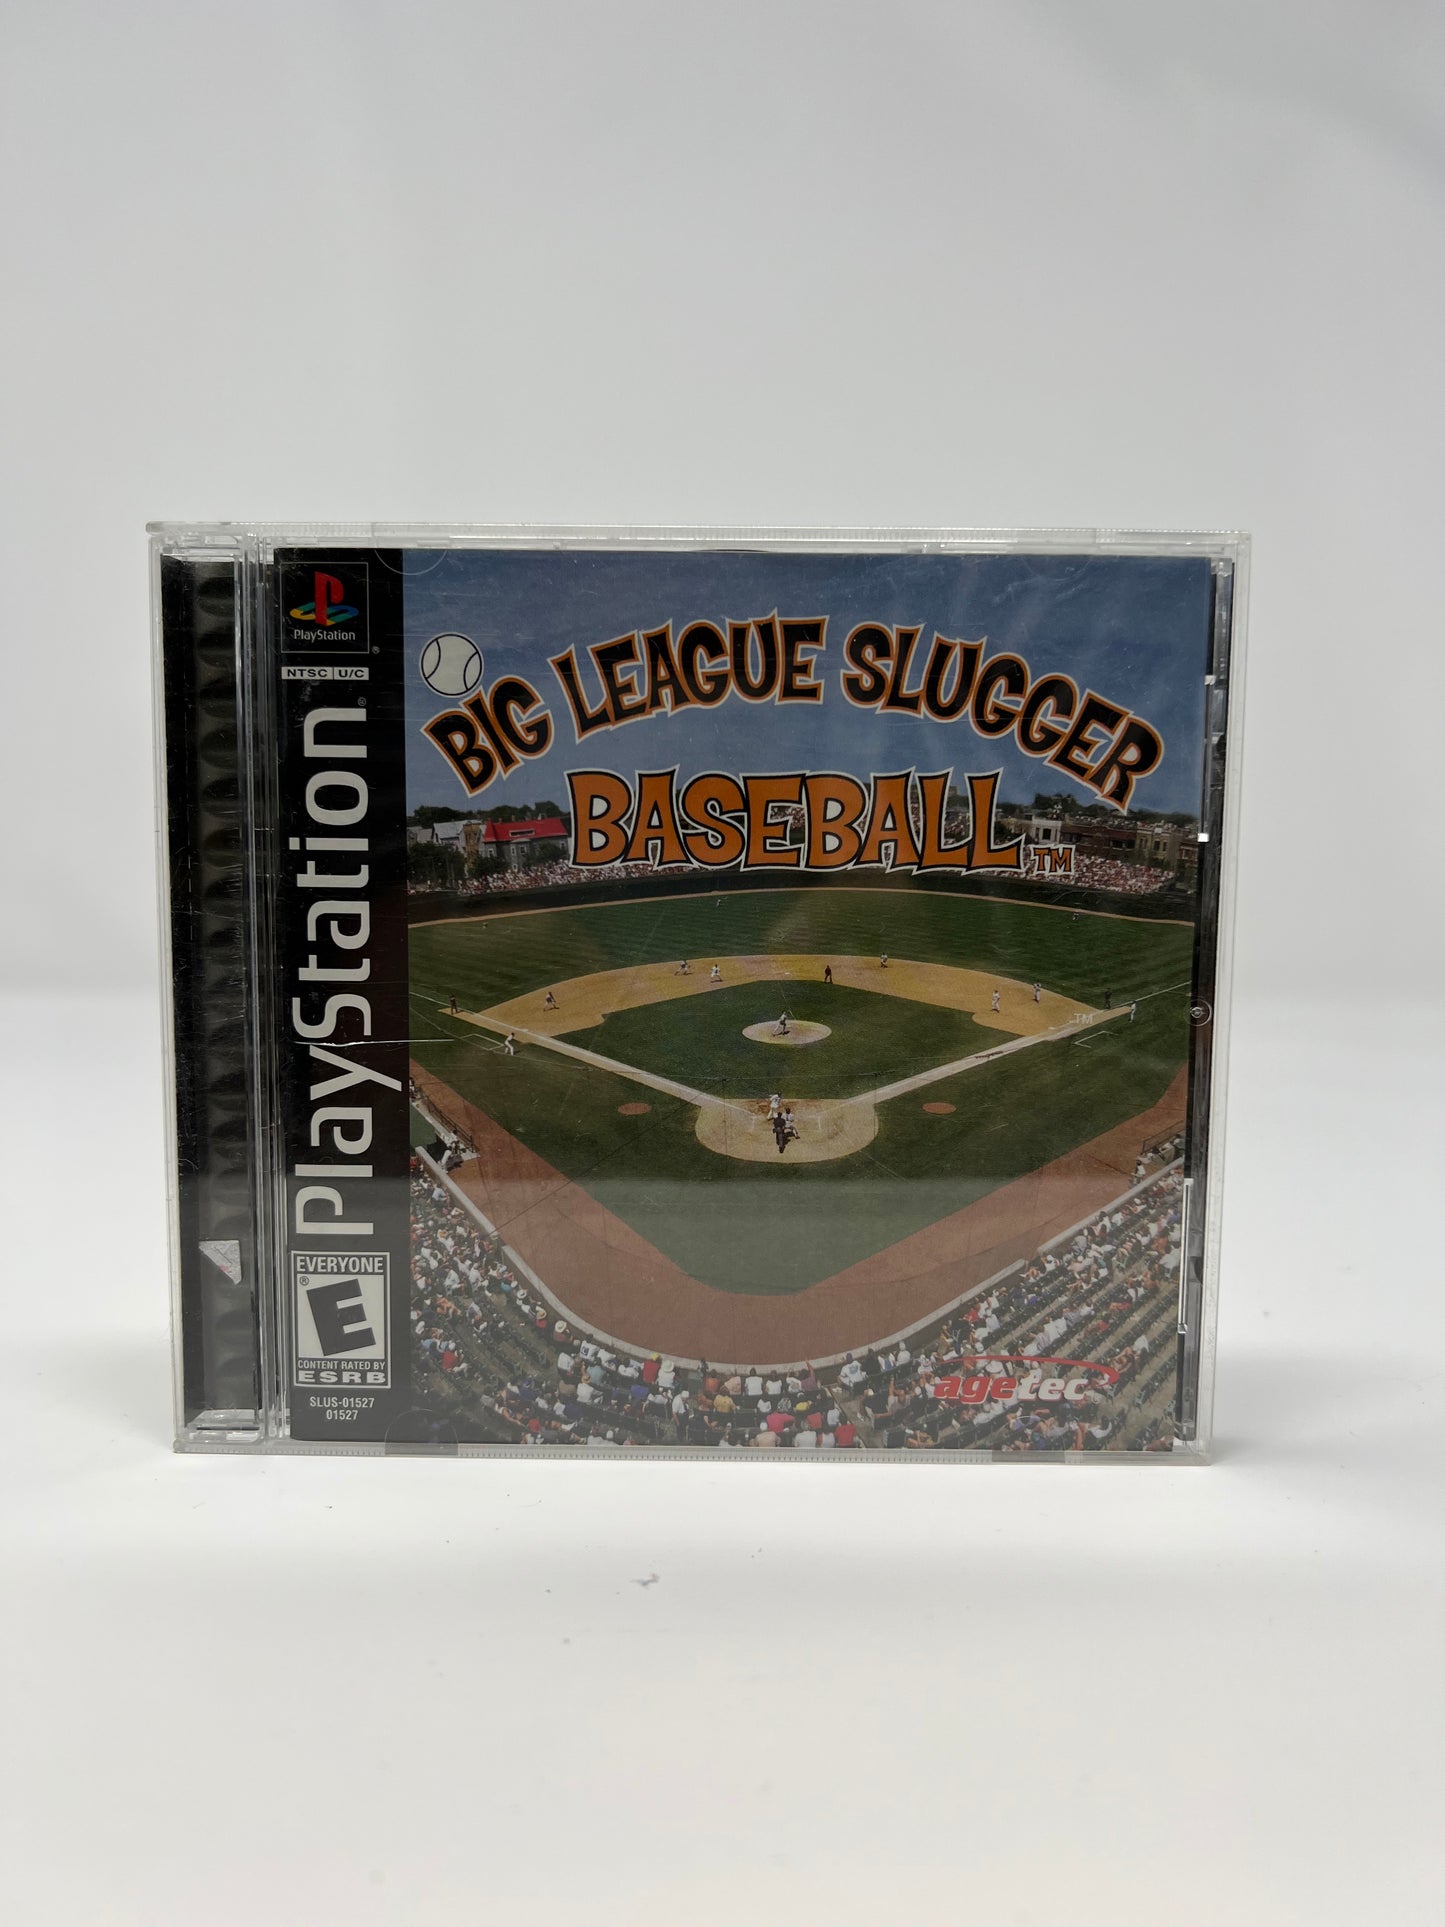 Big League Slugger Baseball - PS1 Game - Used